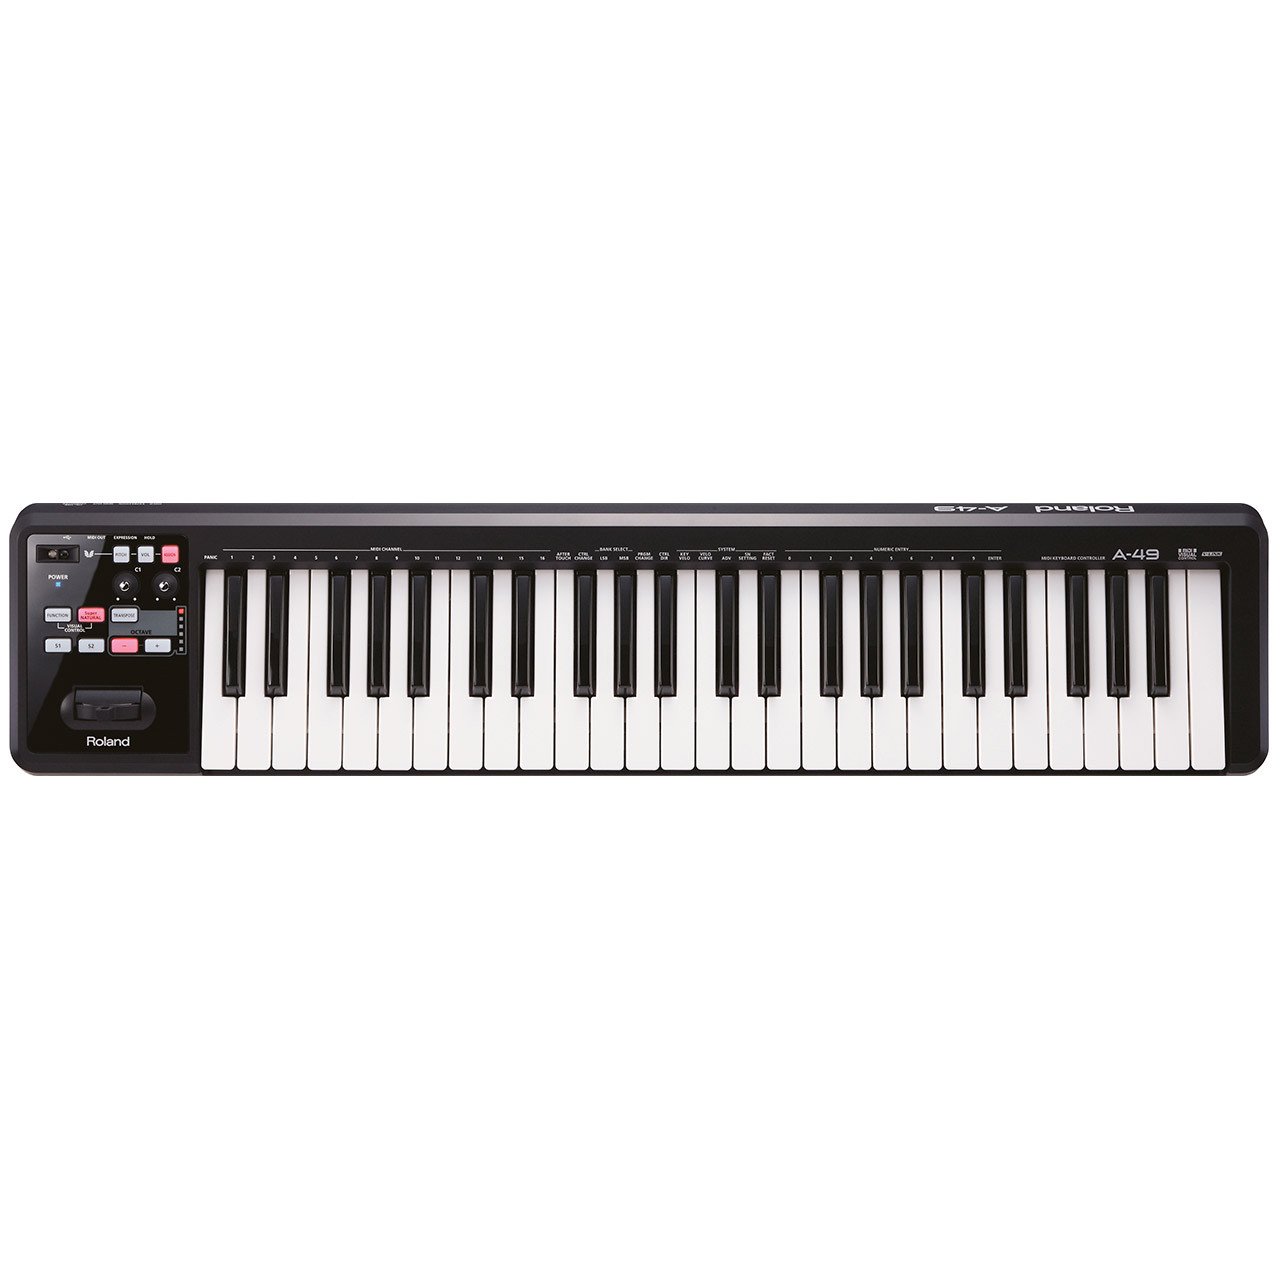 Controller Keyboards - Roland A-49 MIDI Keyboard Controller - BLACK